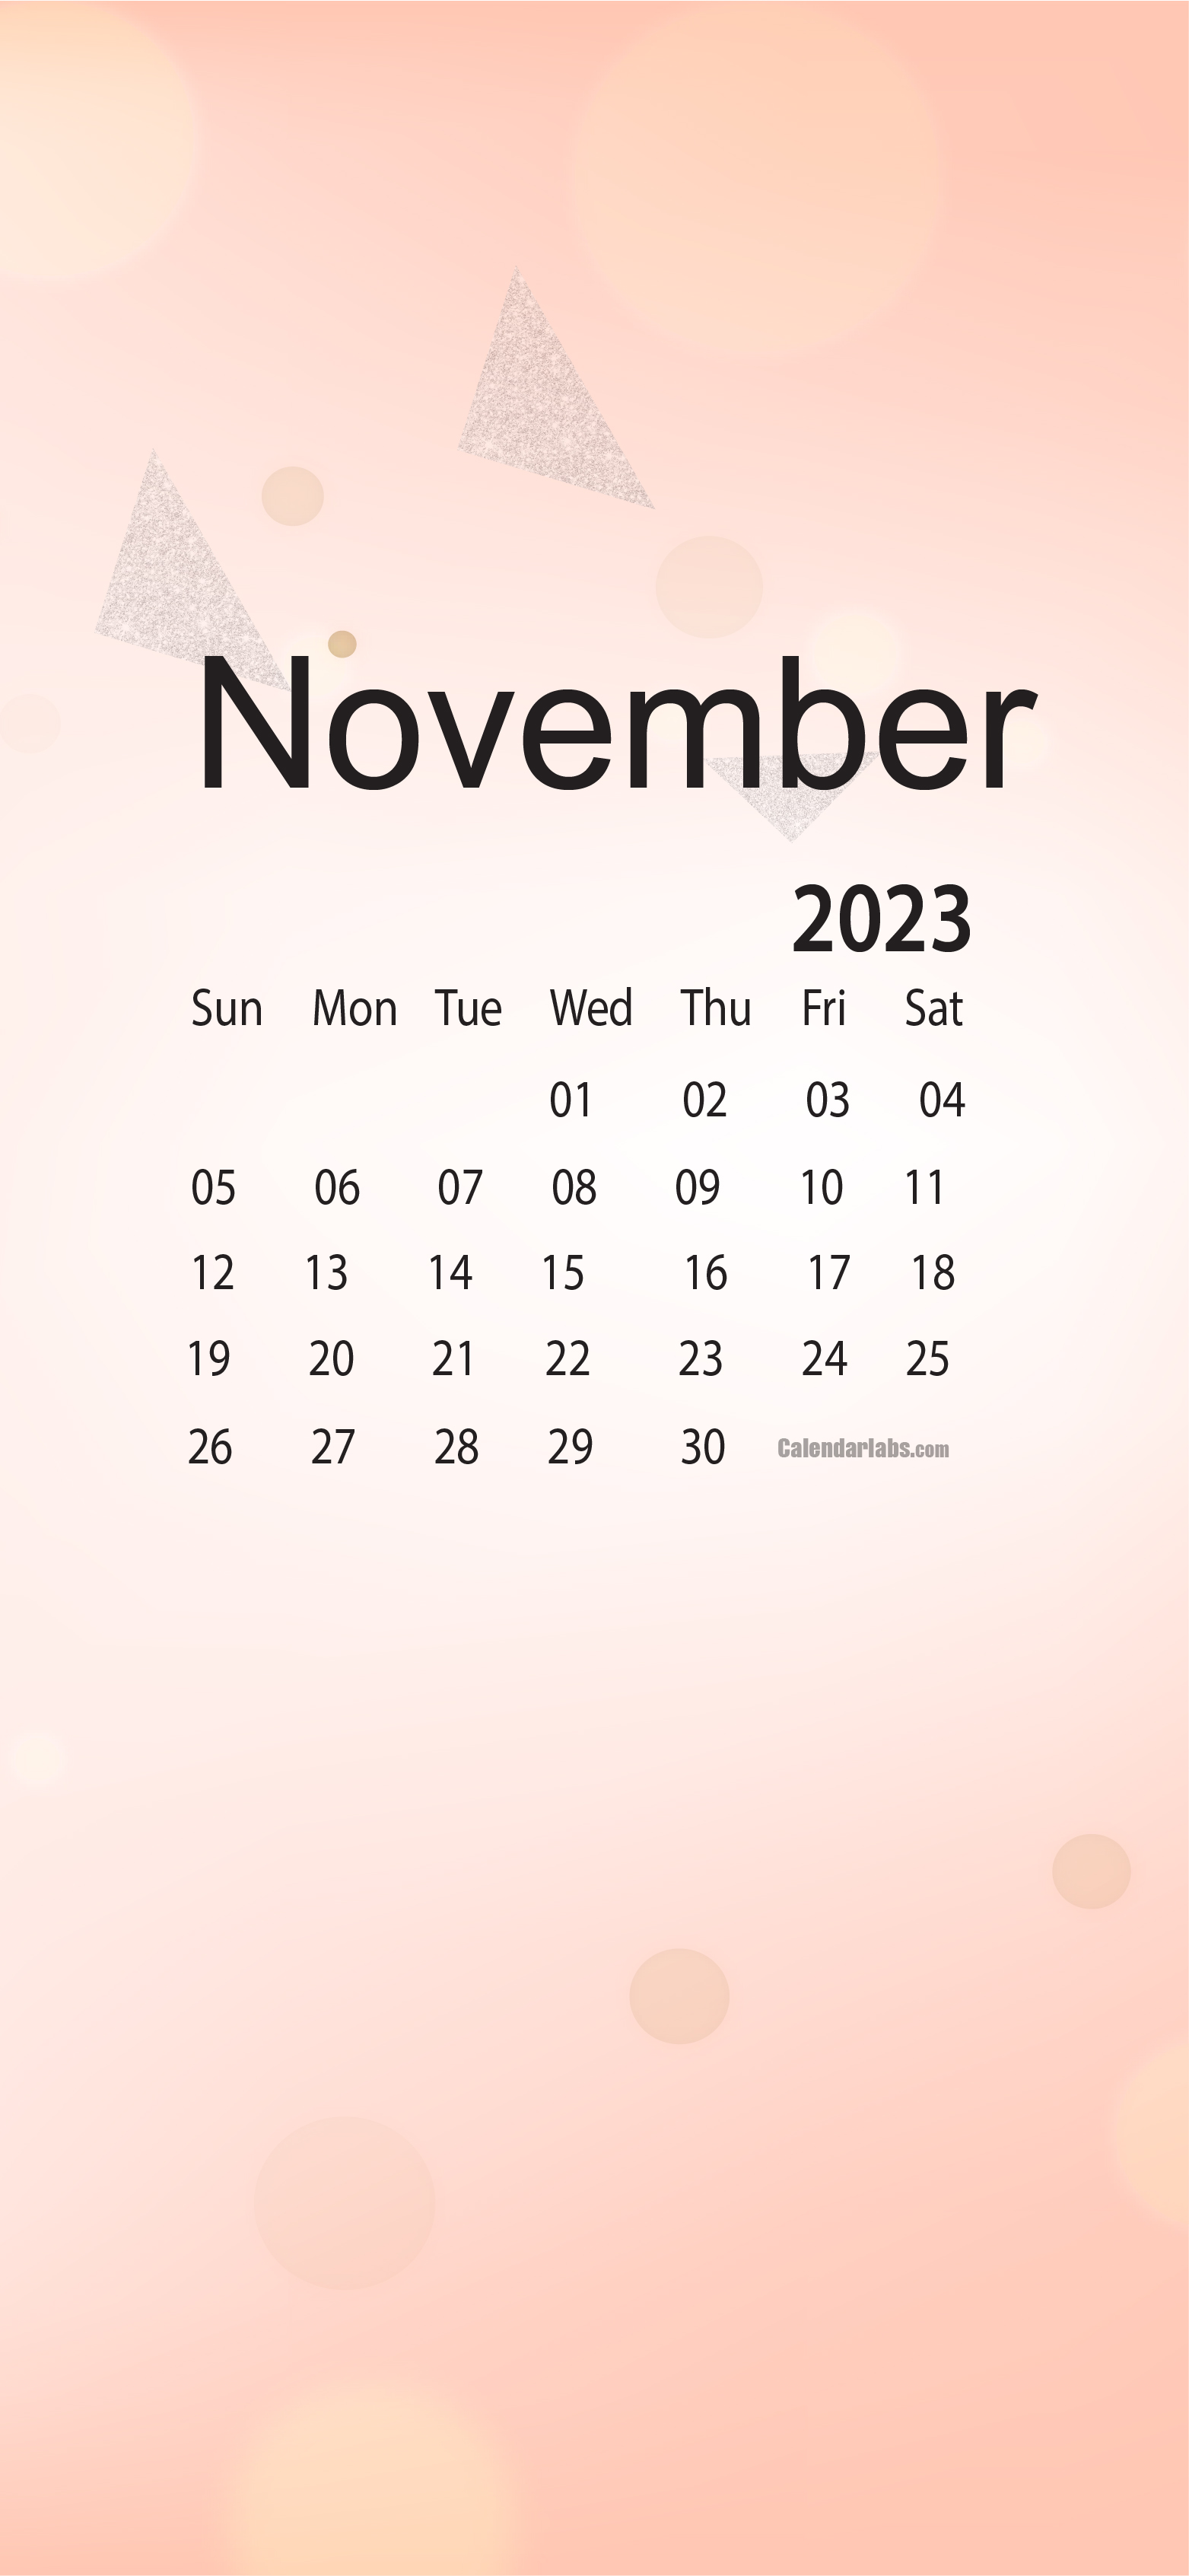 Cactus November 2022 calendar template  Free PSD Template  rawpixel